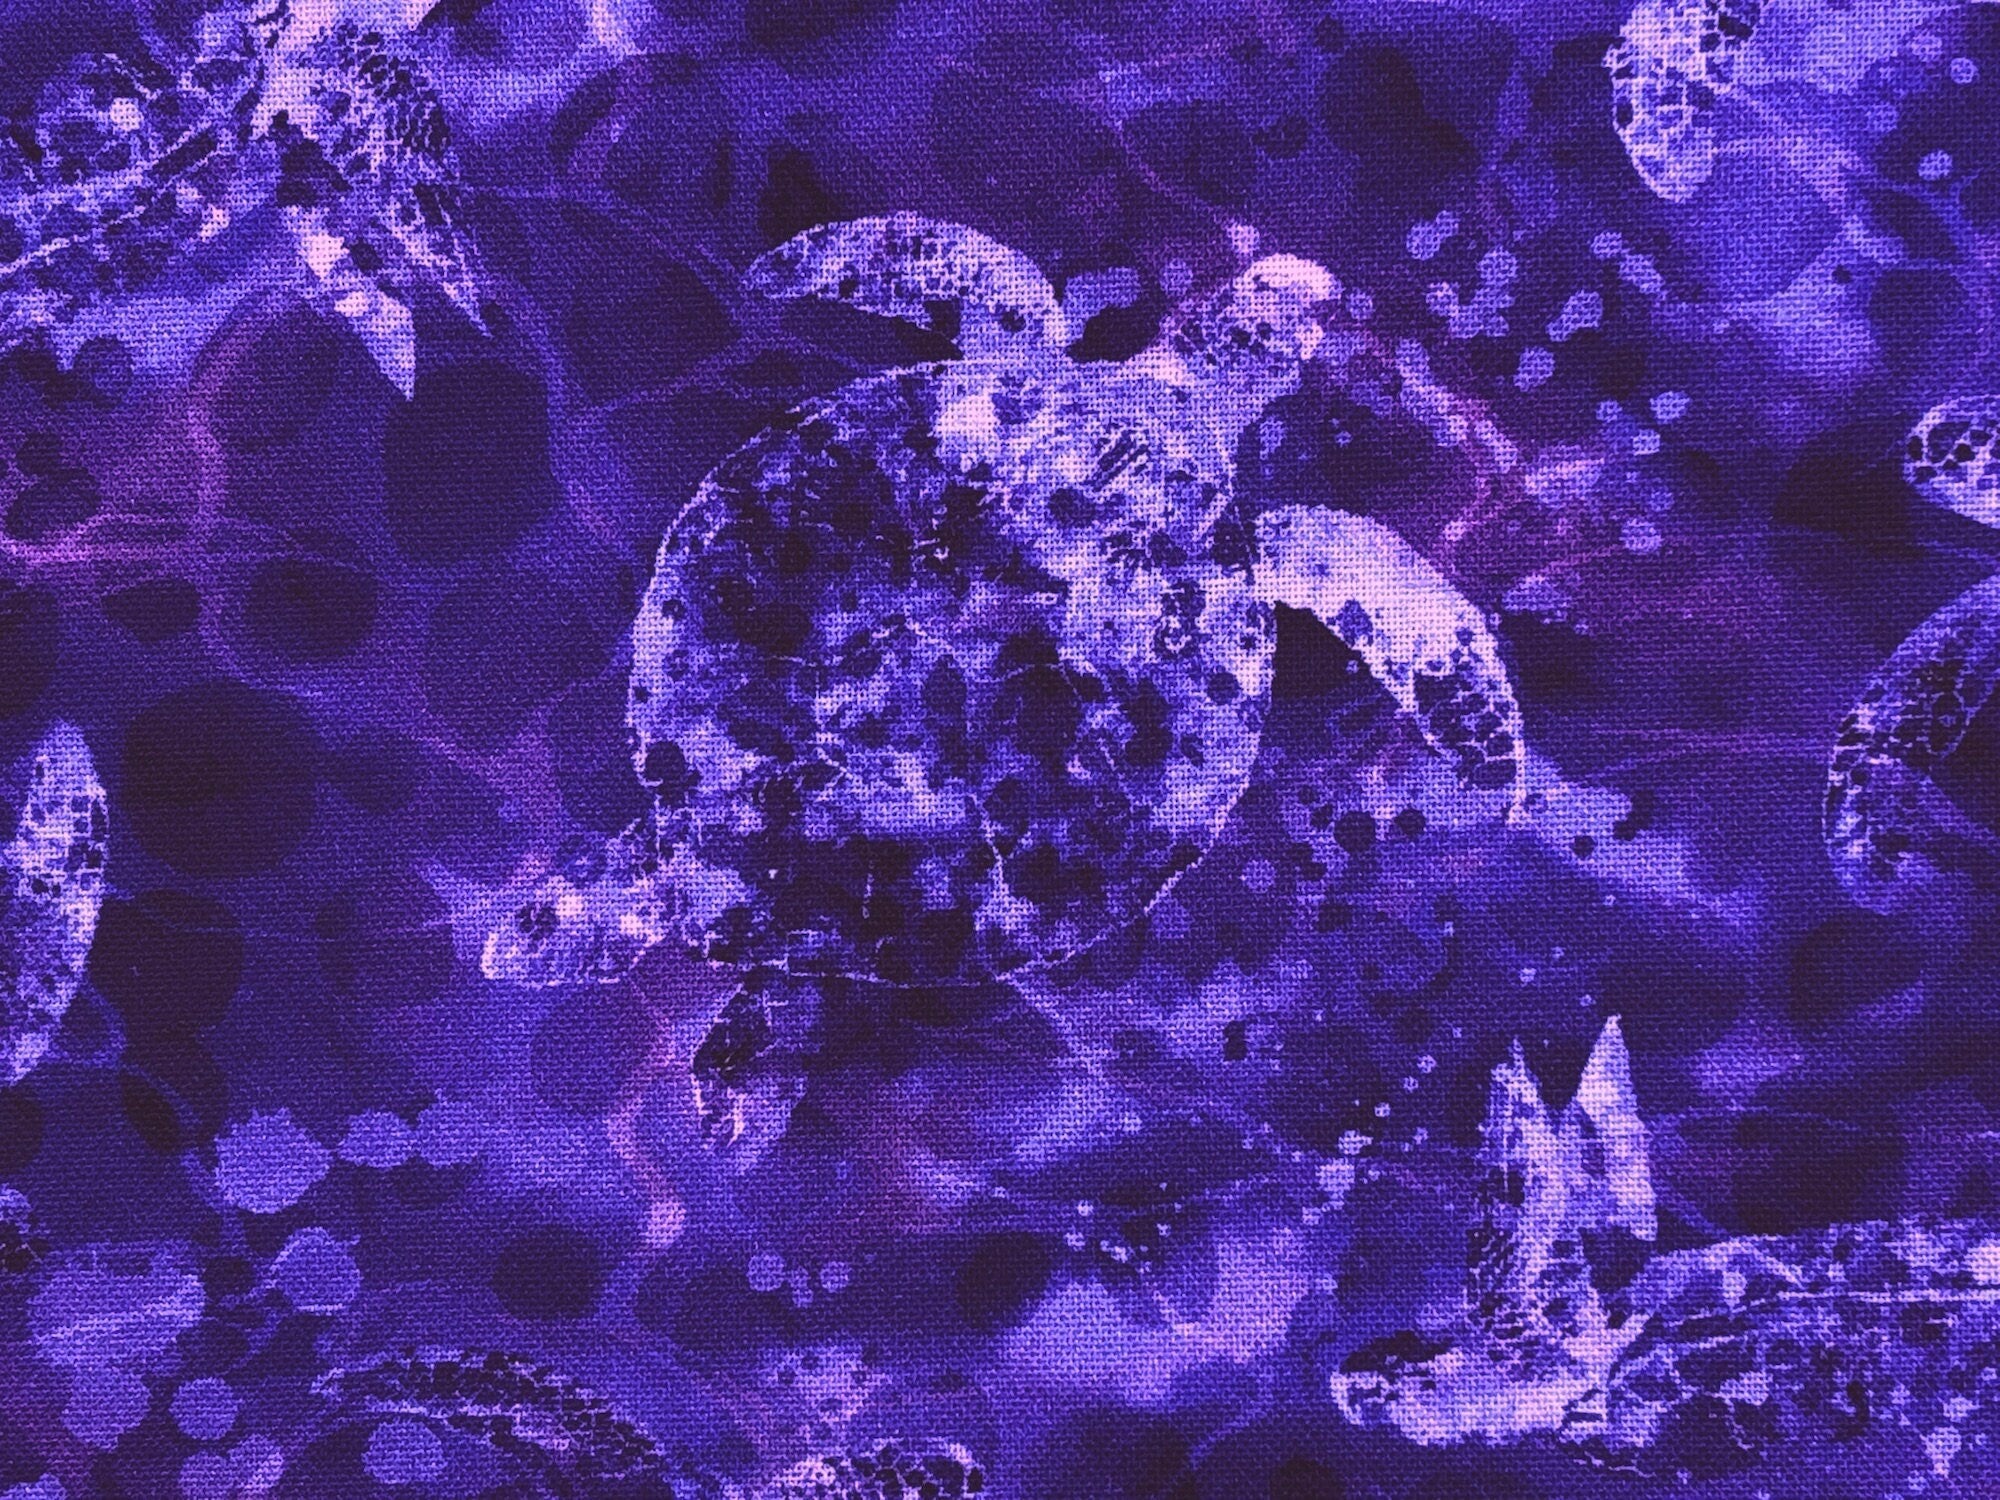 Close up of purple turtles on purple cotton fabric.